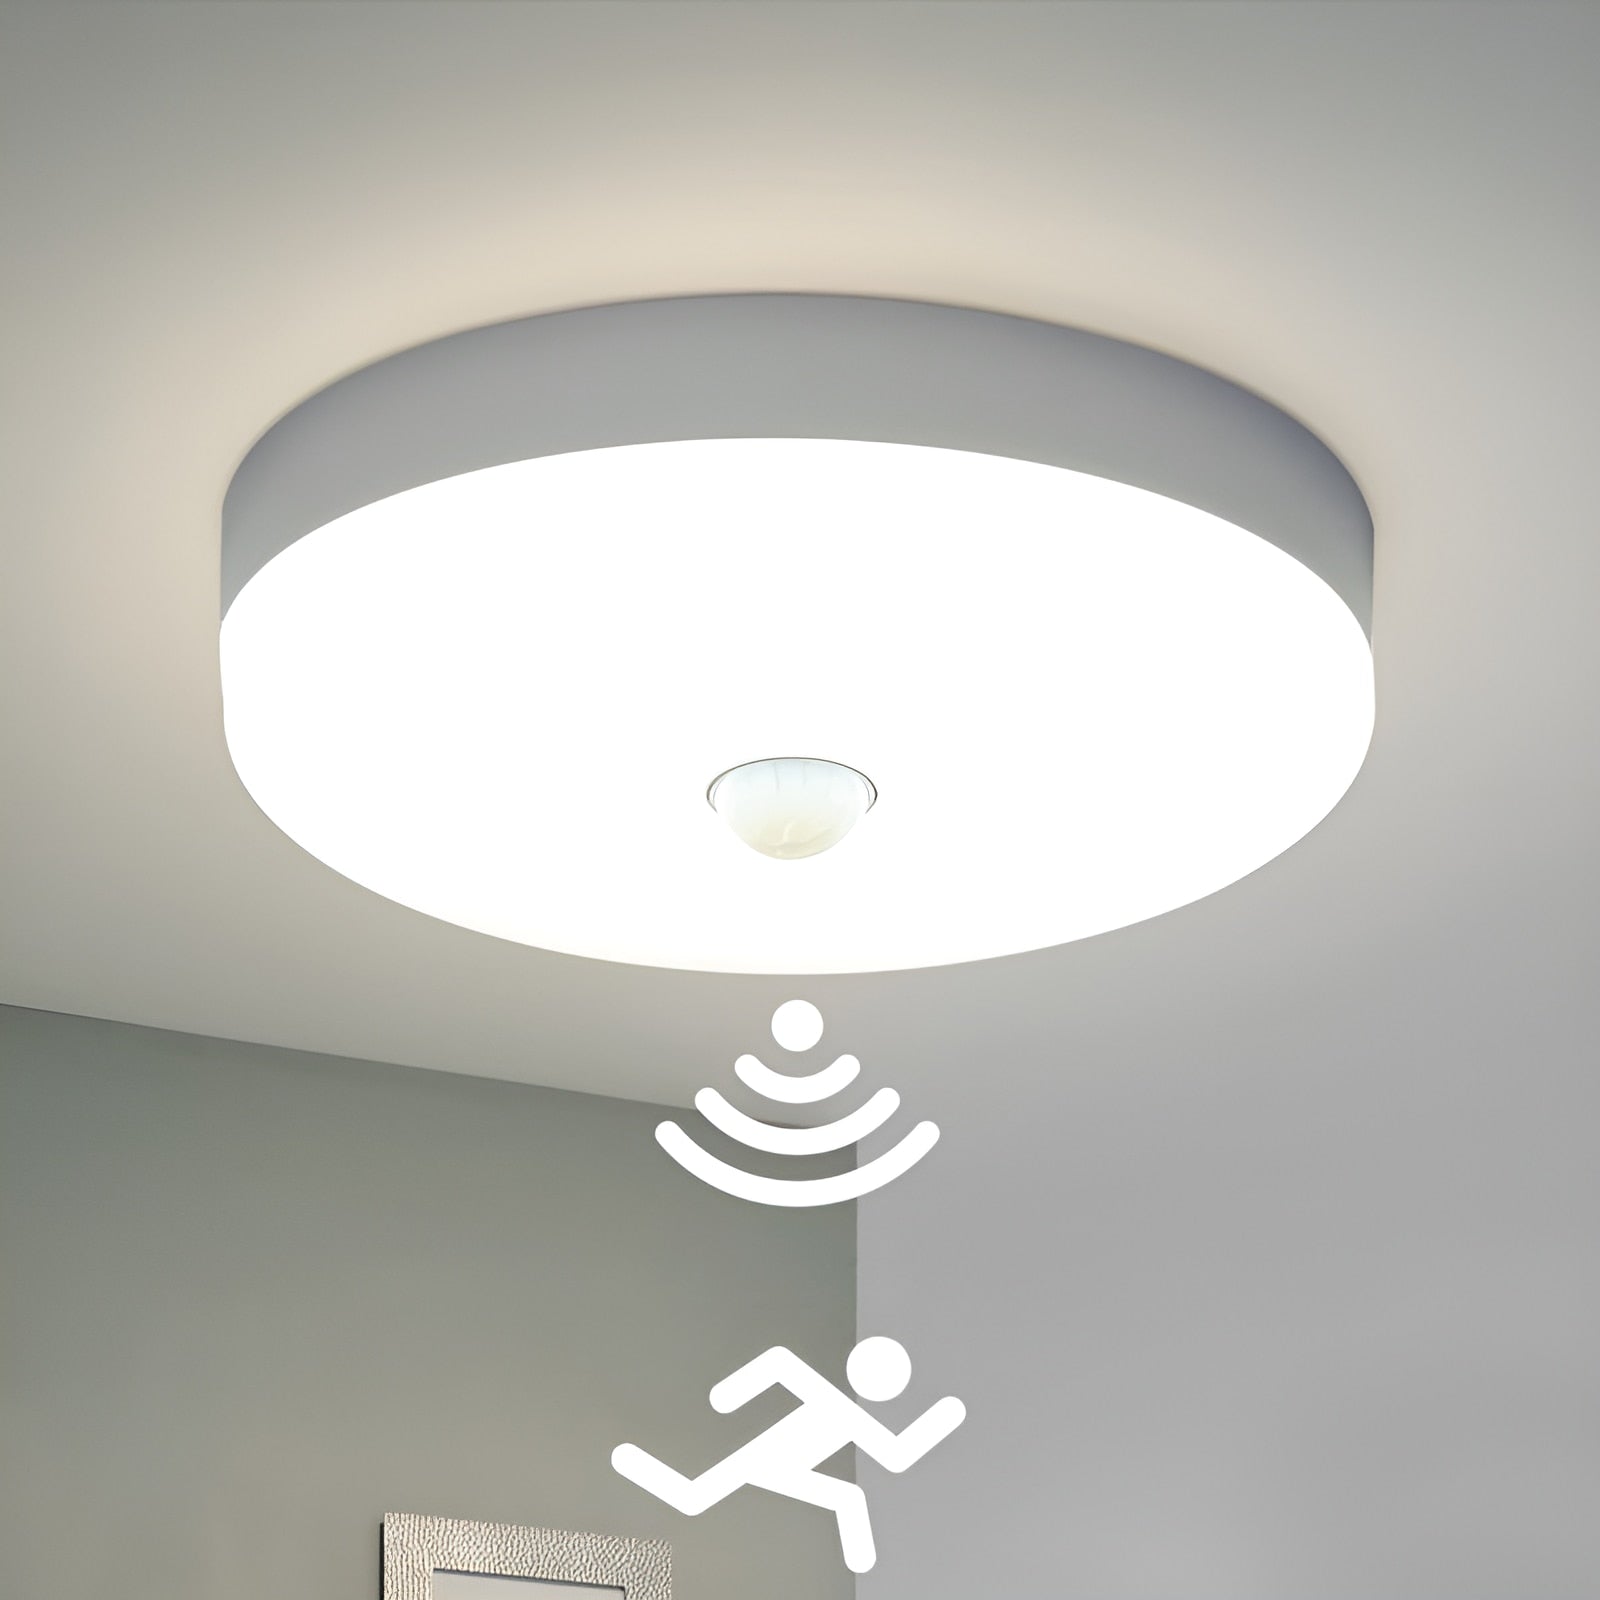 Motion Sensor Light Ceiling Lamps Modern Smart Home Indoor Aisle LED Hanging Induction Lighting LivingRoom Ceil Luminaire Lamp